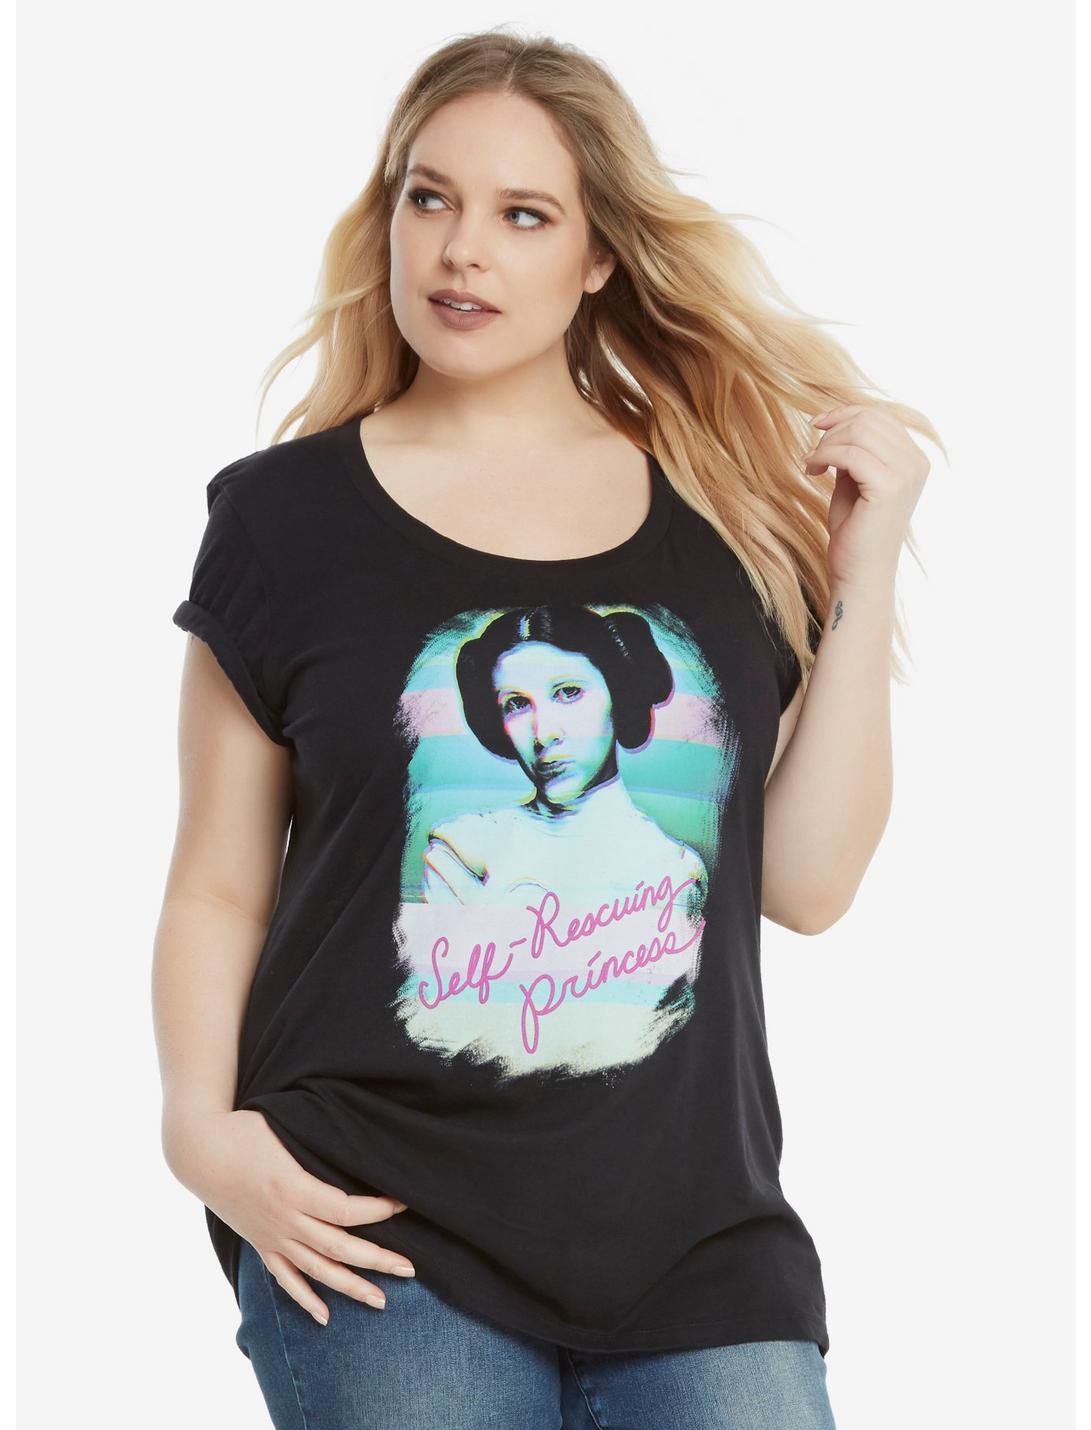 Star Wars Princess Leia Self-Rescuing Princess T-shirt Plus Size, BLACK, hi-res